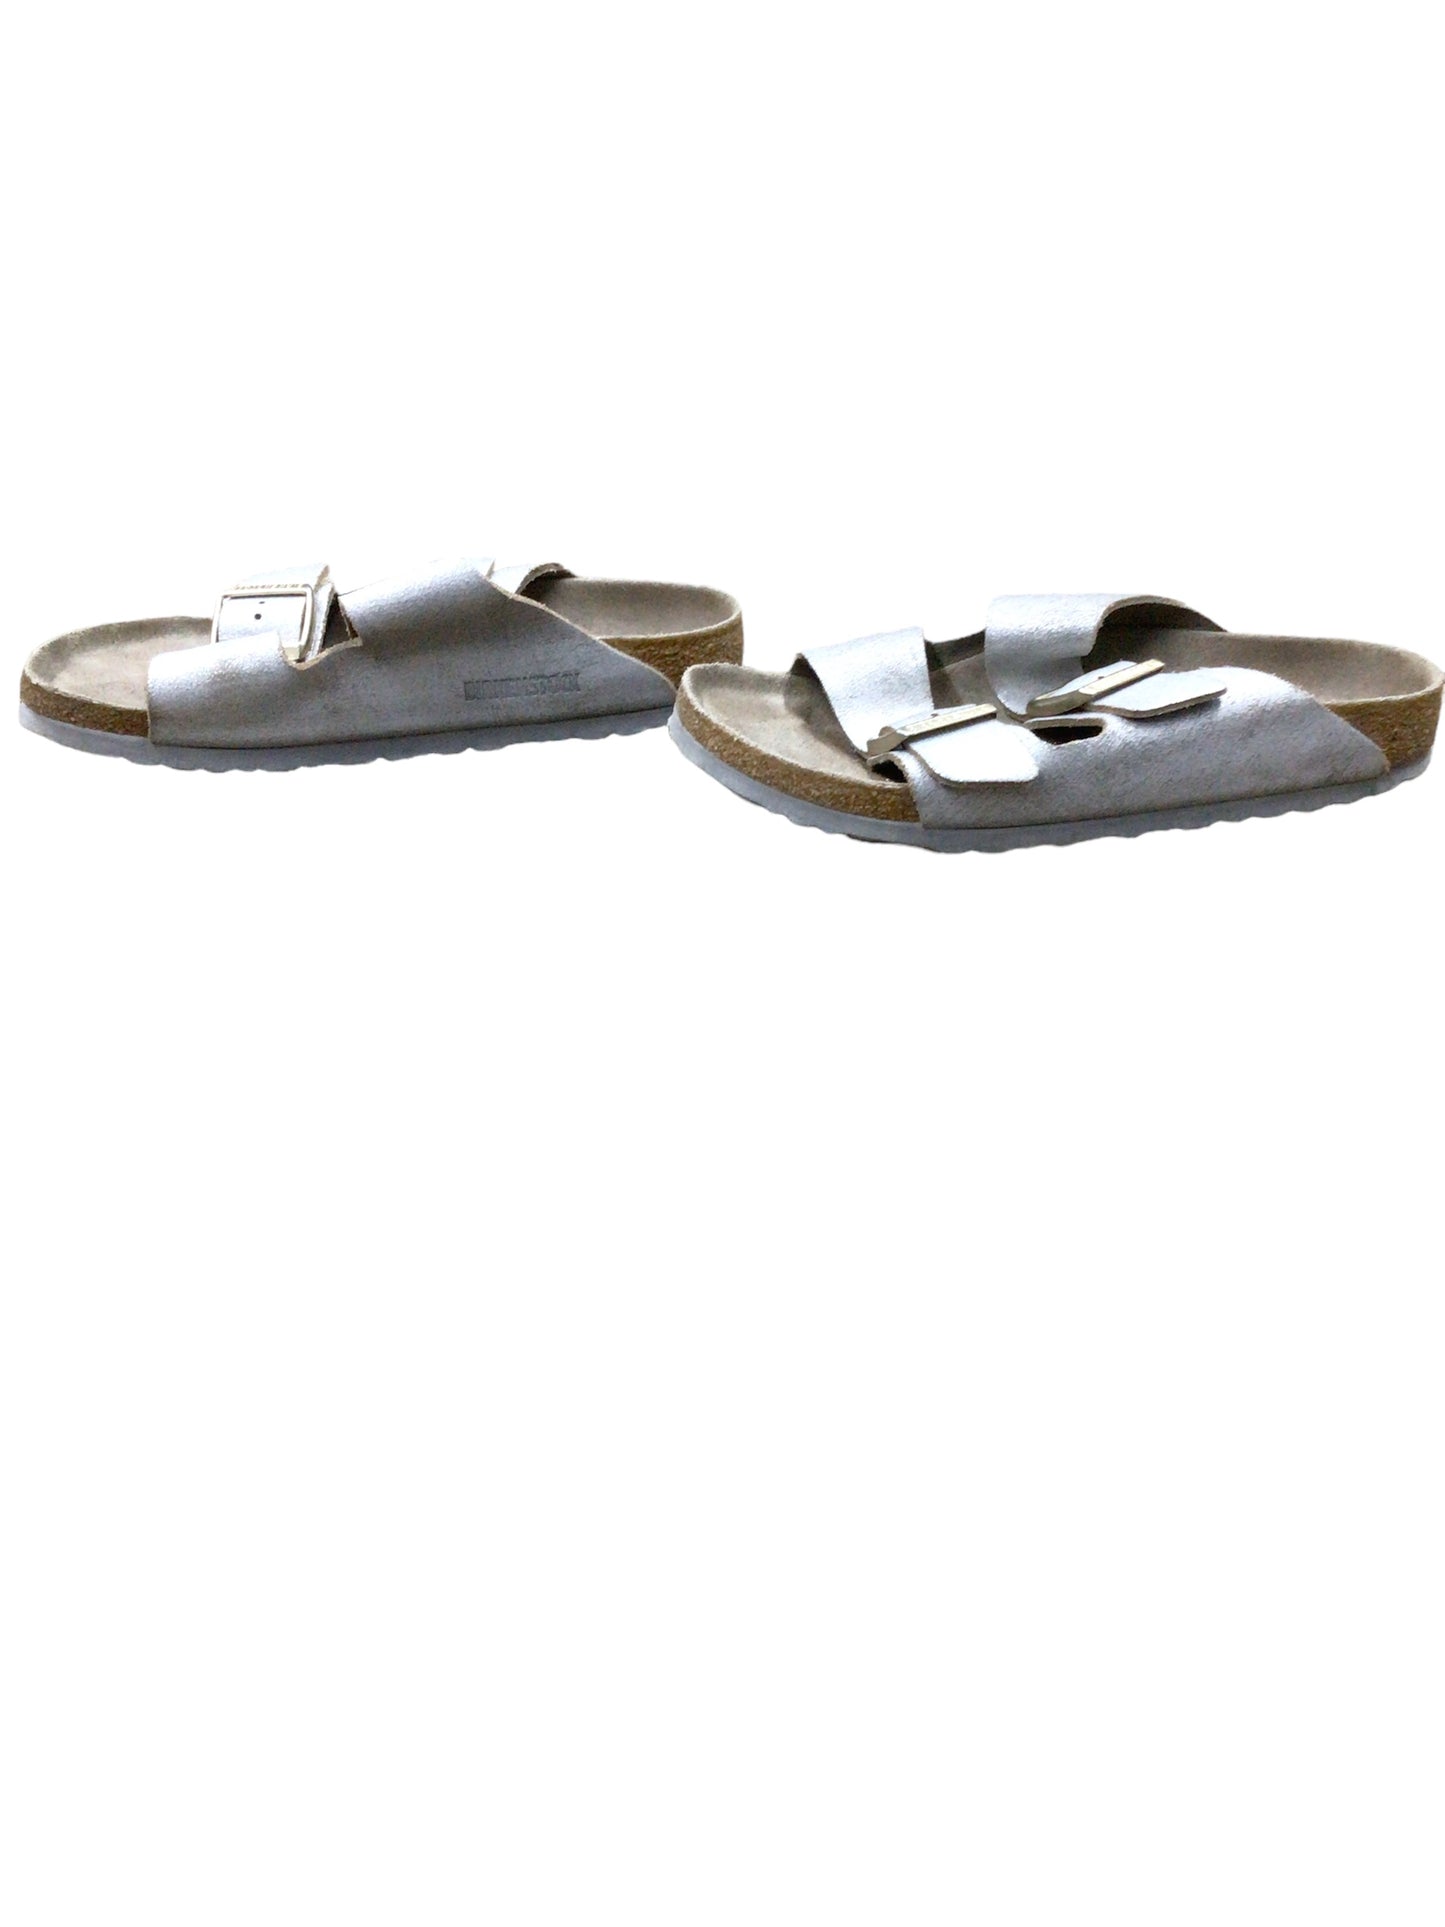 Sandals Designer By Birkenstock  Size: 6